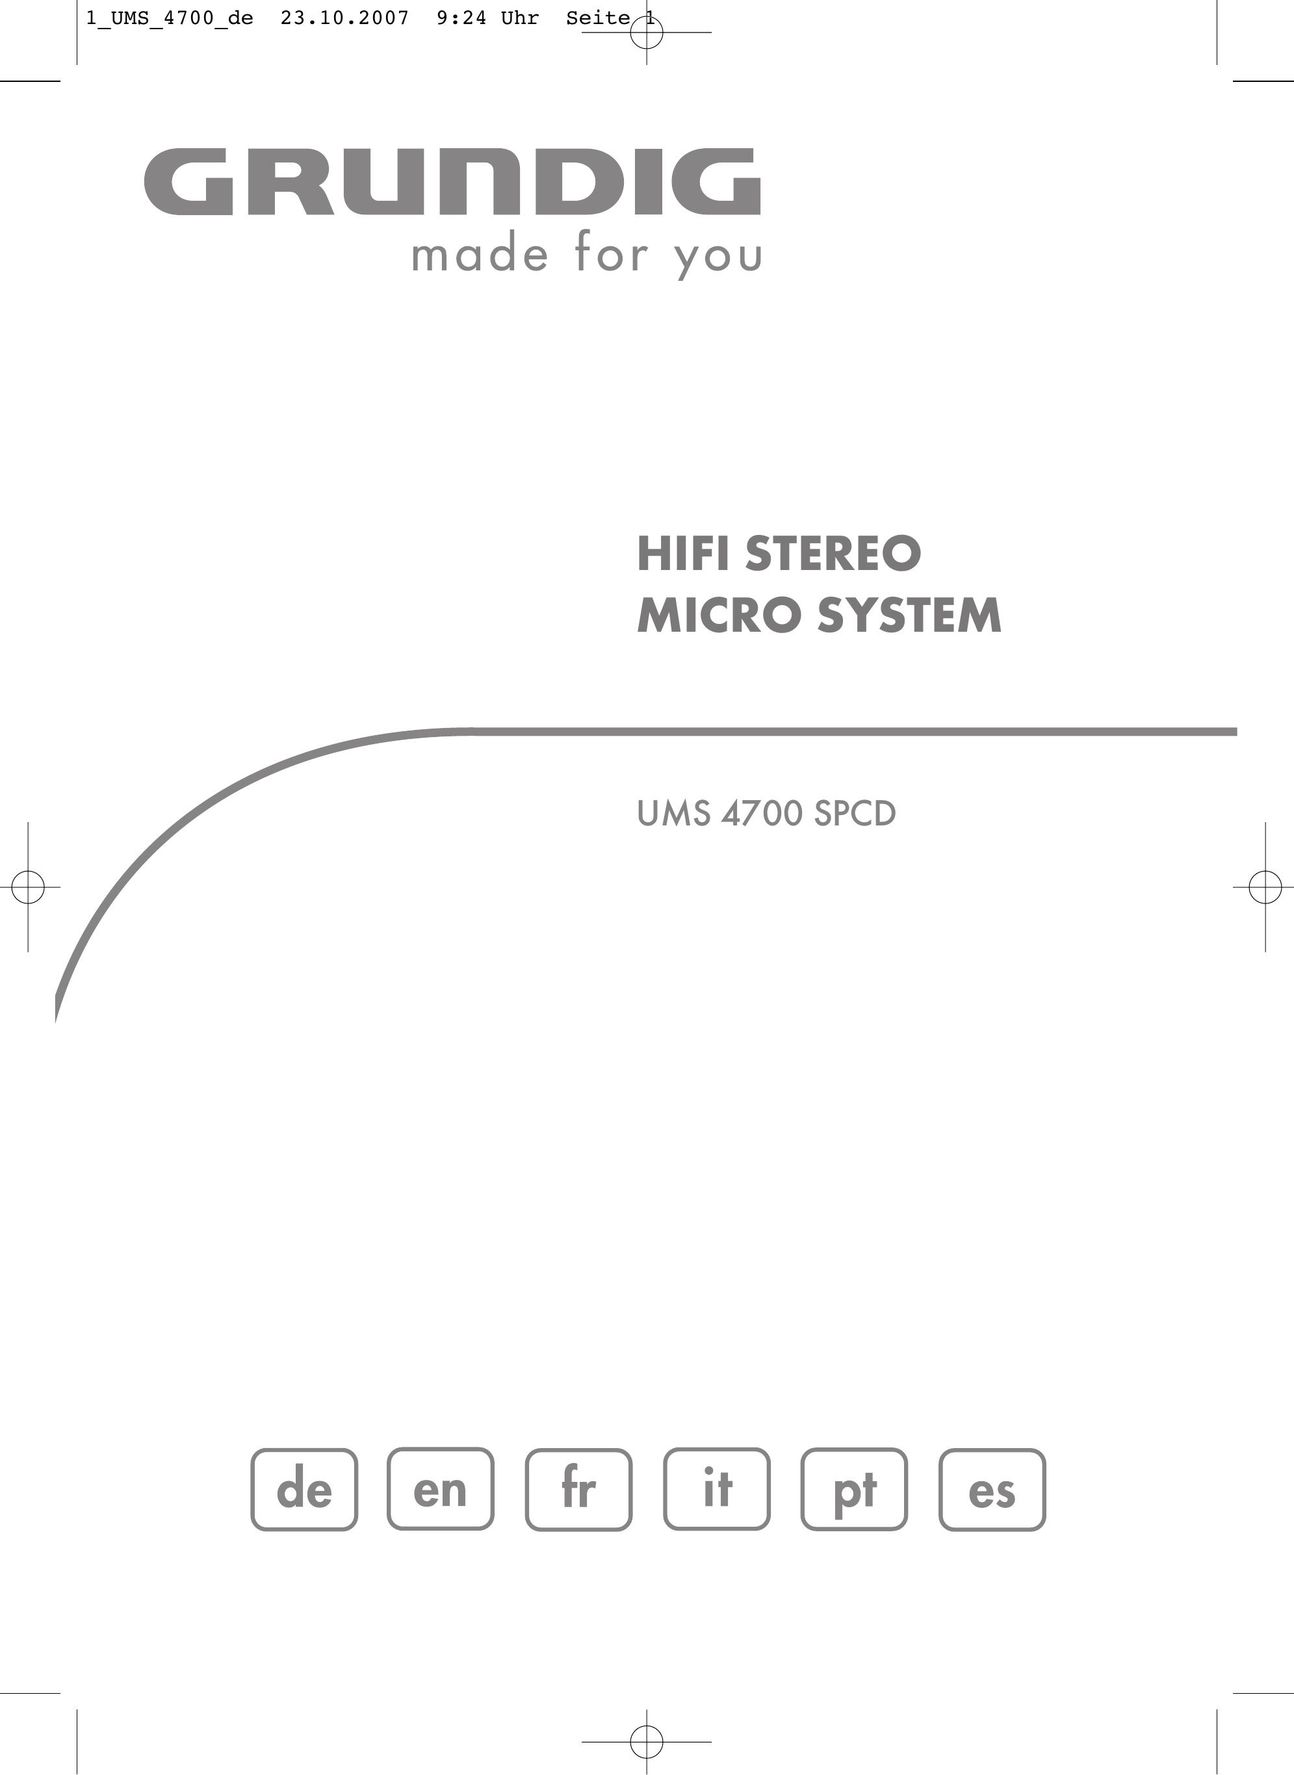 Grundig UMS 4700 SPCD Car Stereo System User Manual